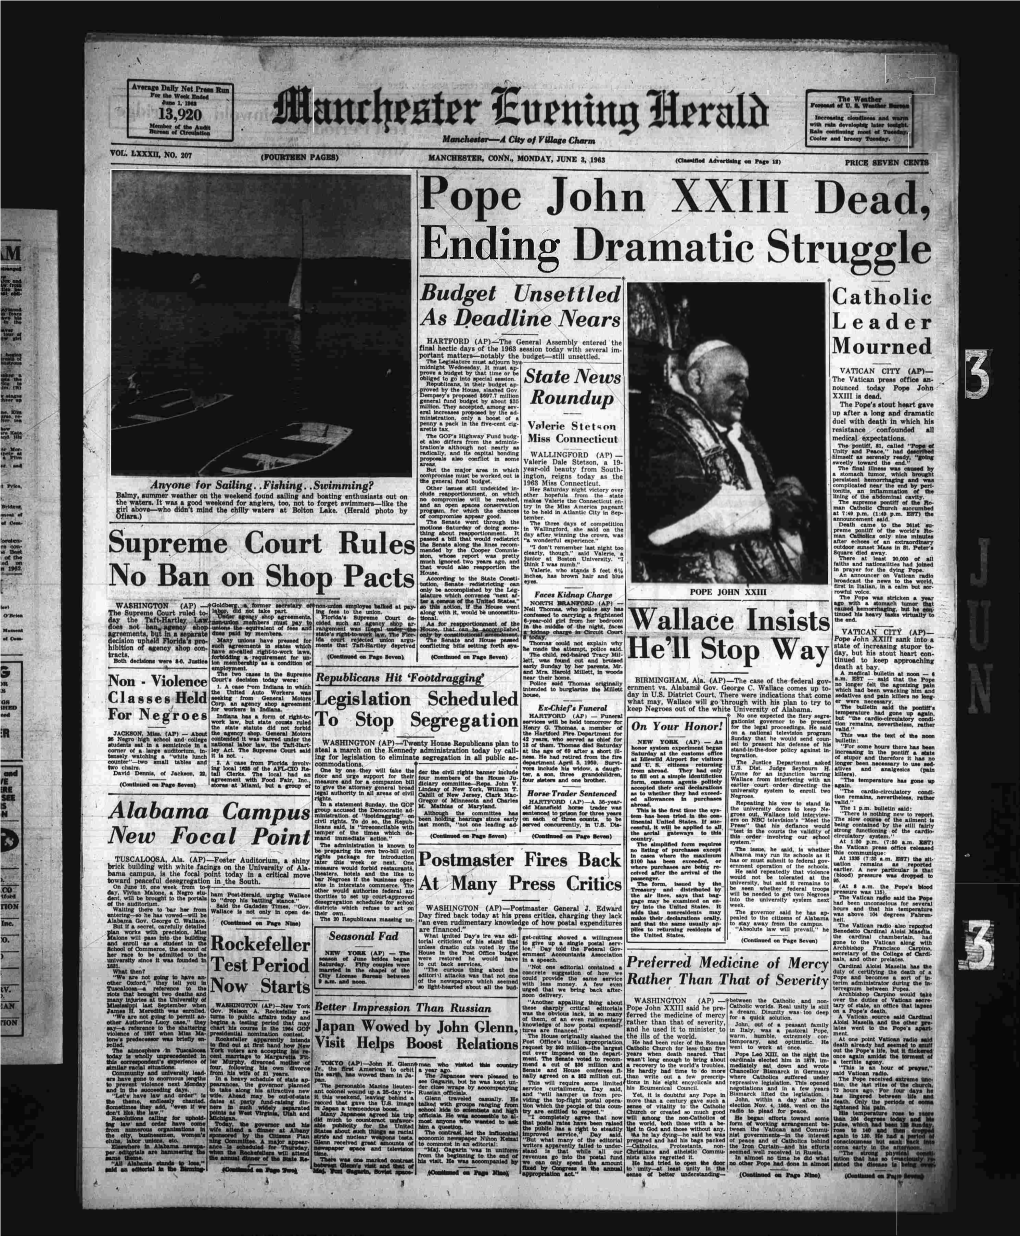 Pope John XXIII Dead, Dramatic Struggle